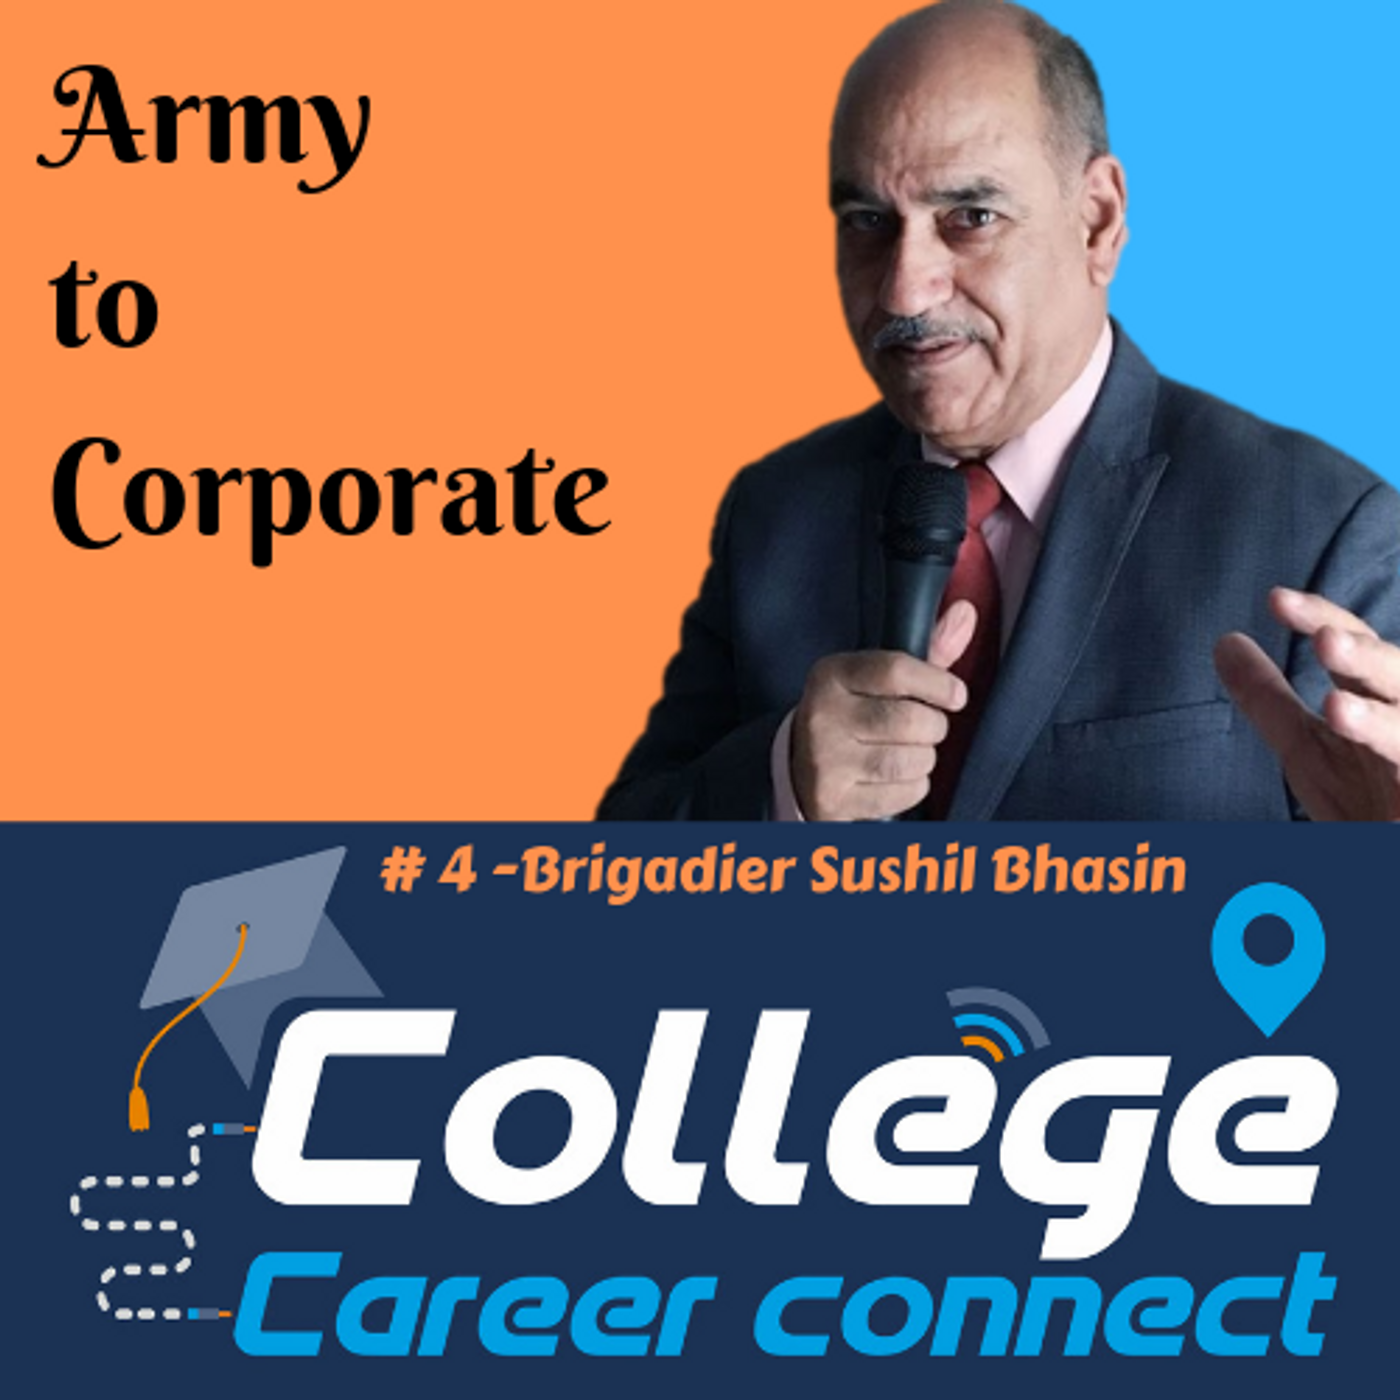 #4. Army To Corporate - Brigadier Sushil Bhasin